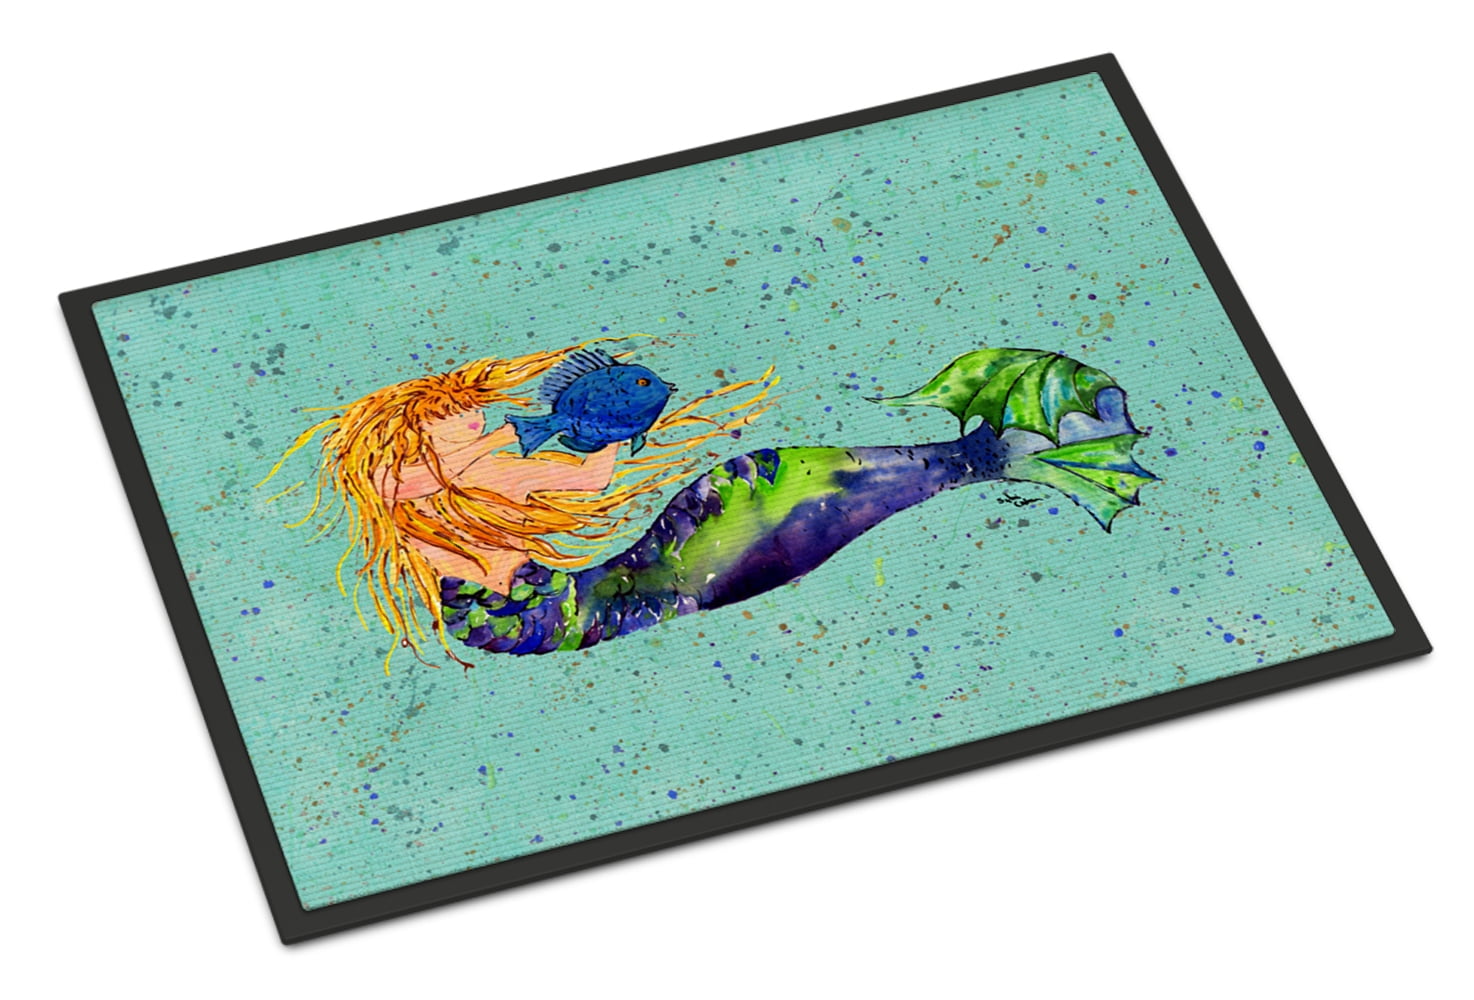 Caroline Treasures Blonde Mermaid on Teal Floor Mat Multicolor" 19"" x 27"" 